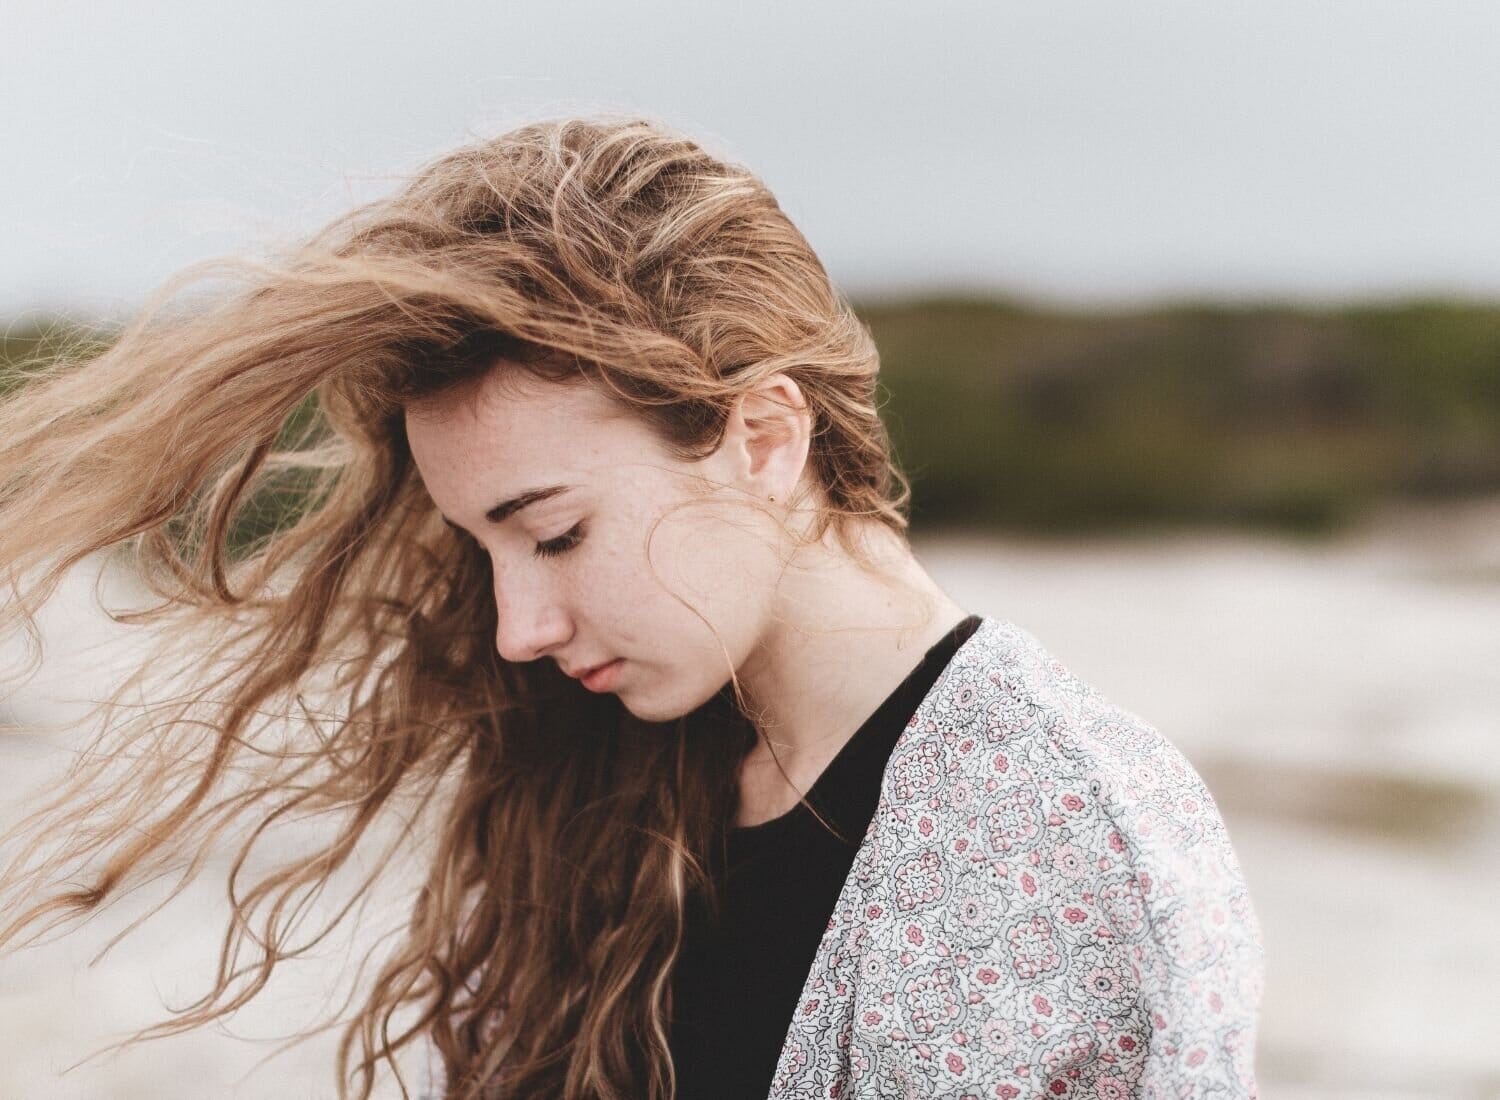 pensive woman walking on the beach wind in her hair